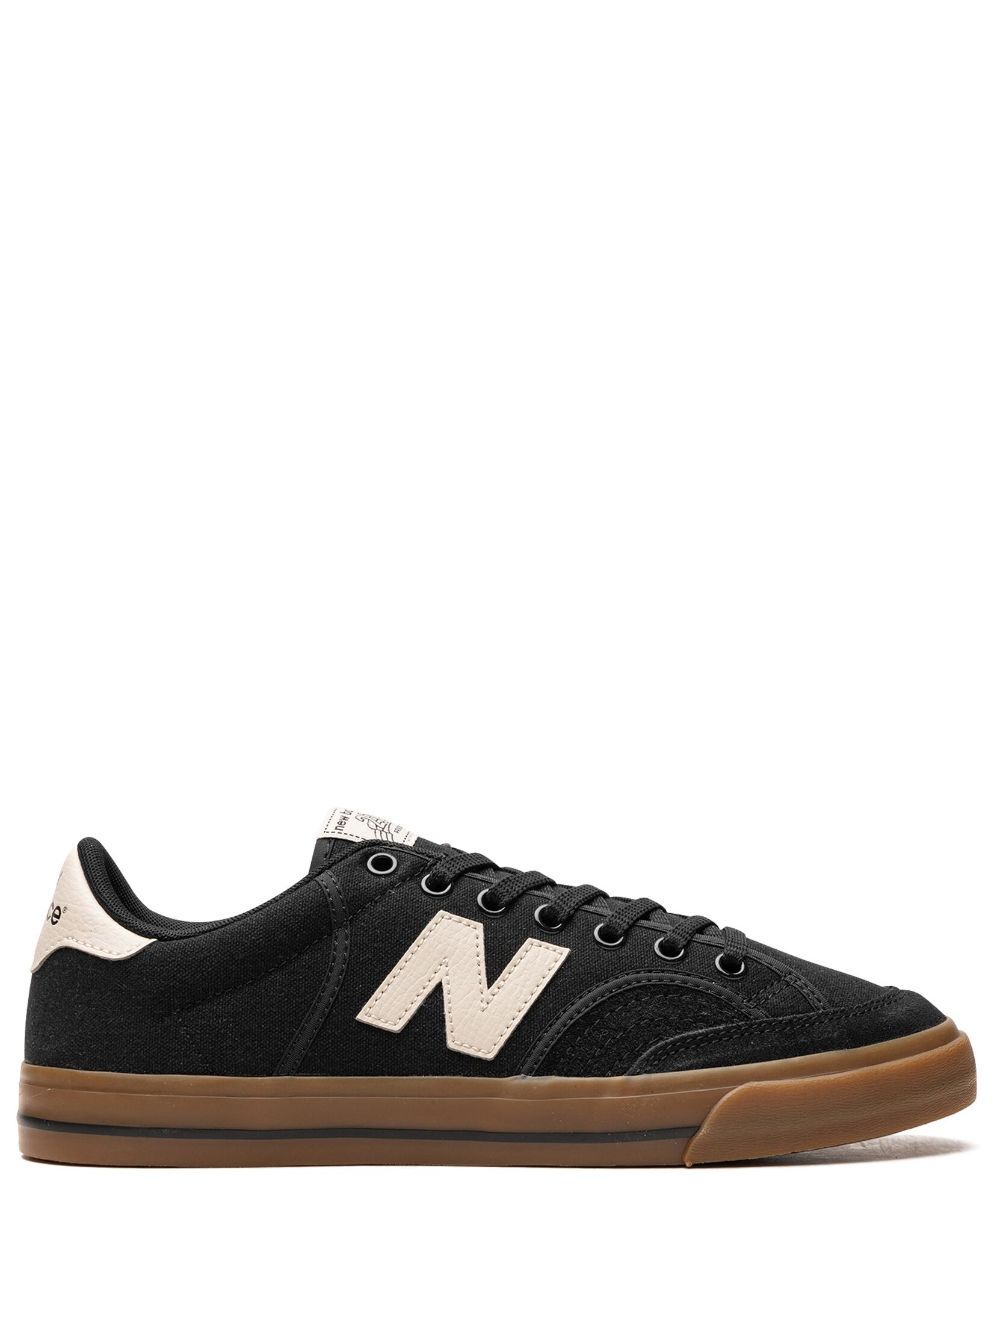 New Balance Numeric 212 Pro Court "Black/Timberwolf Gum" sneakers